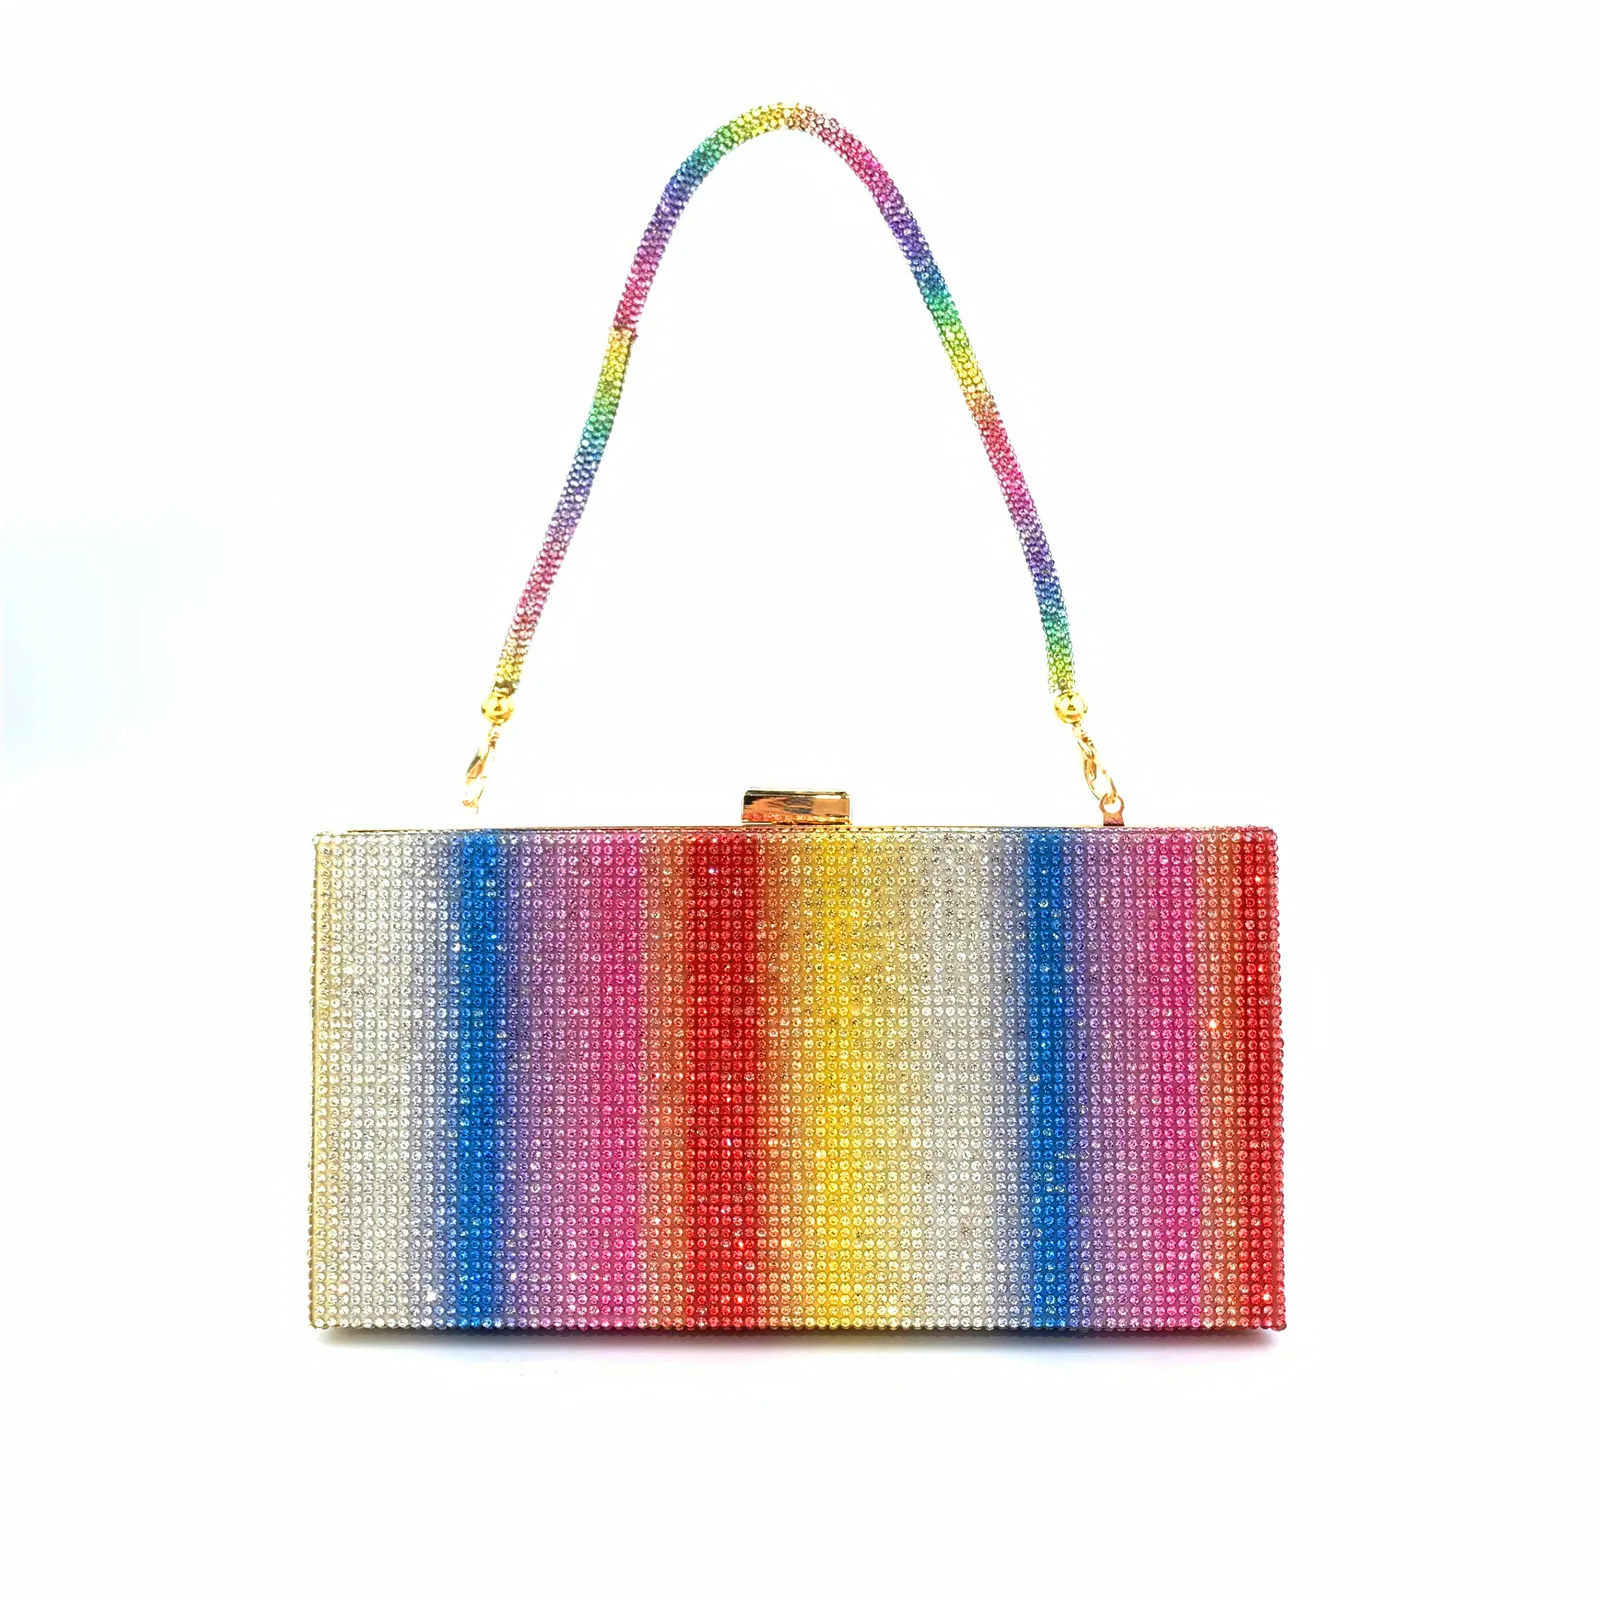 Classic The Sak Rainbow Multi Color Crochet Baguette Barrel Bag Purse | eBay